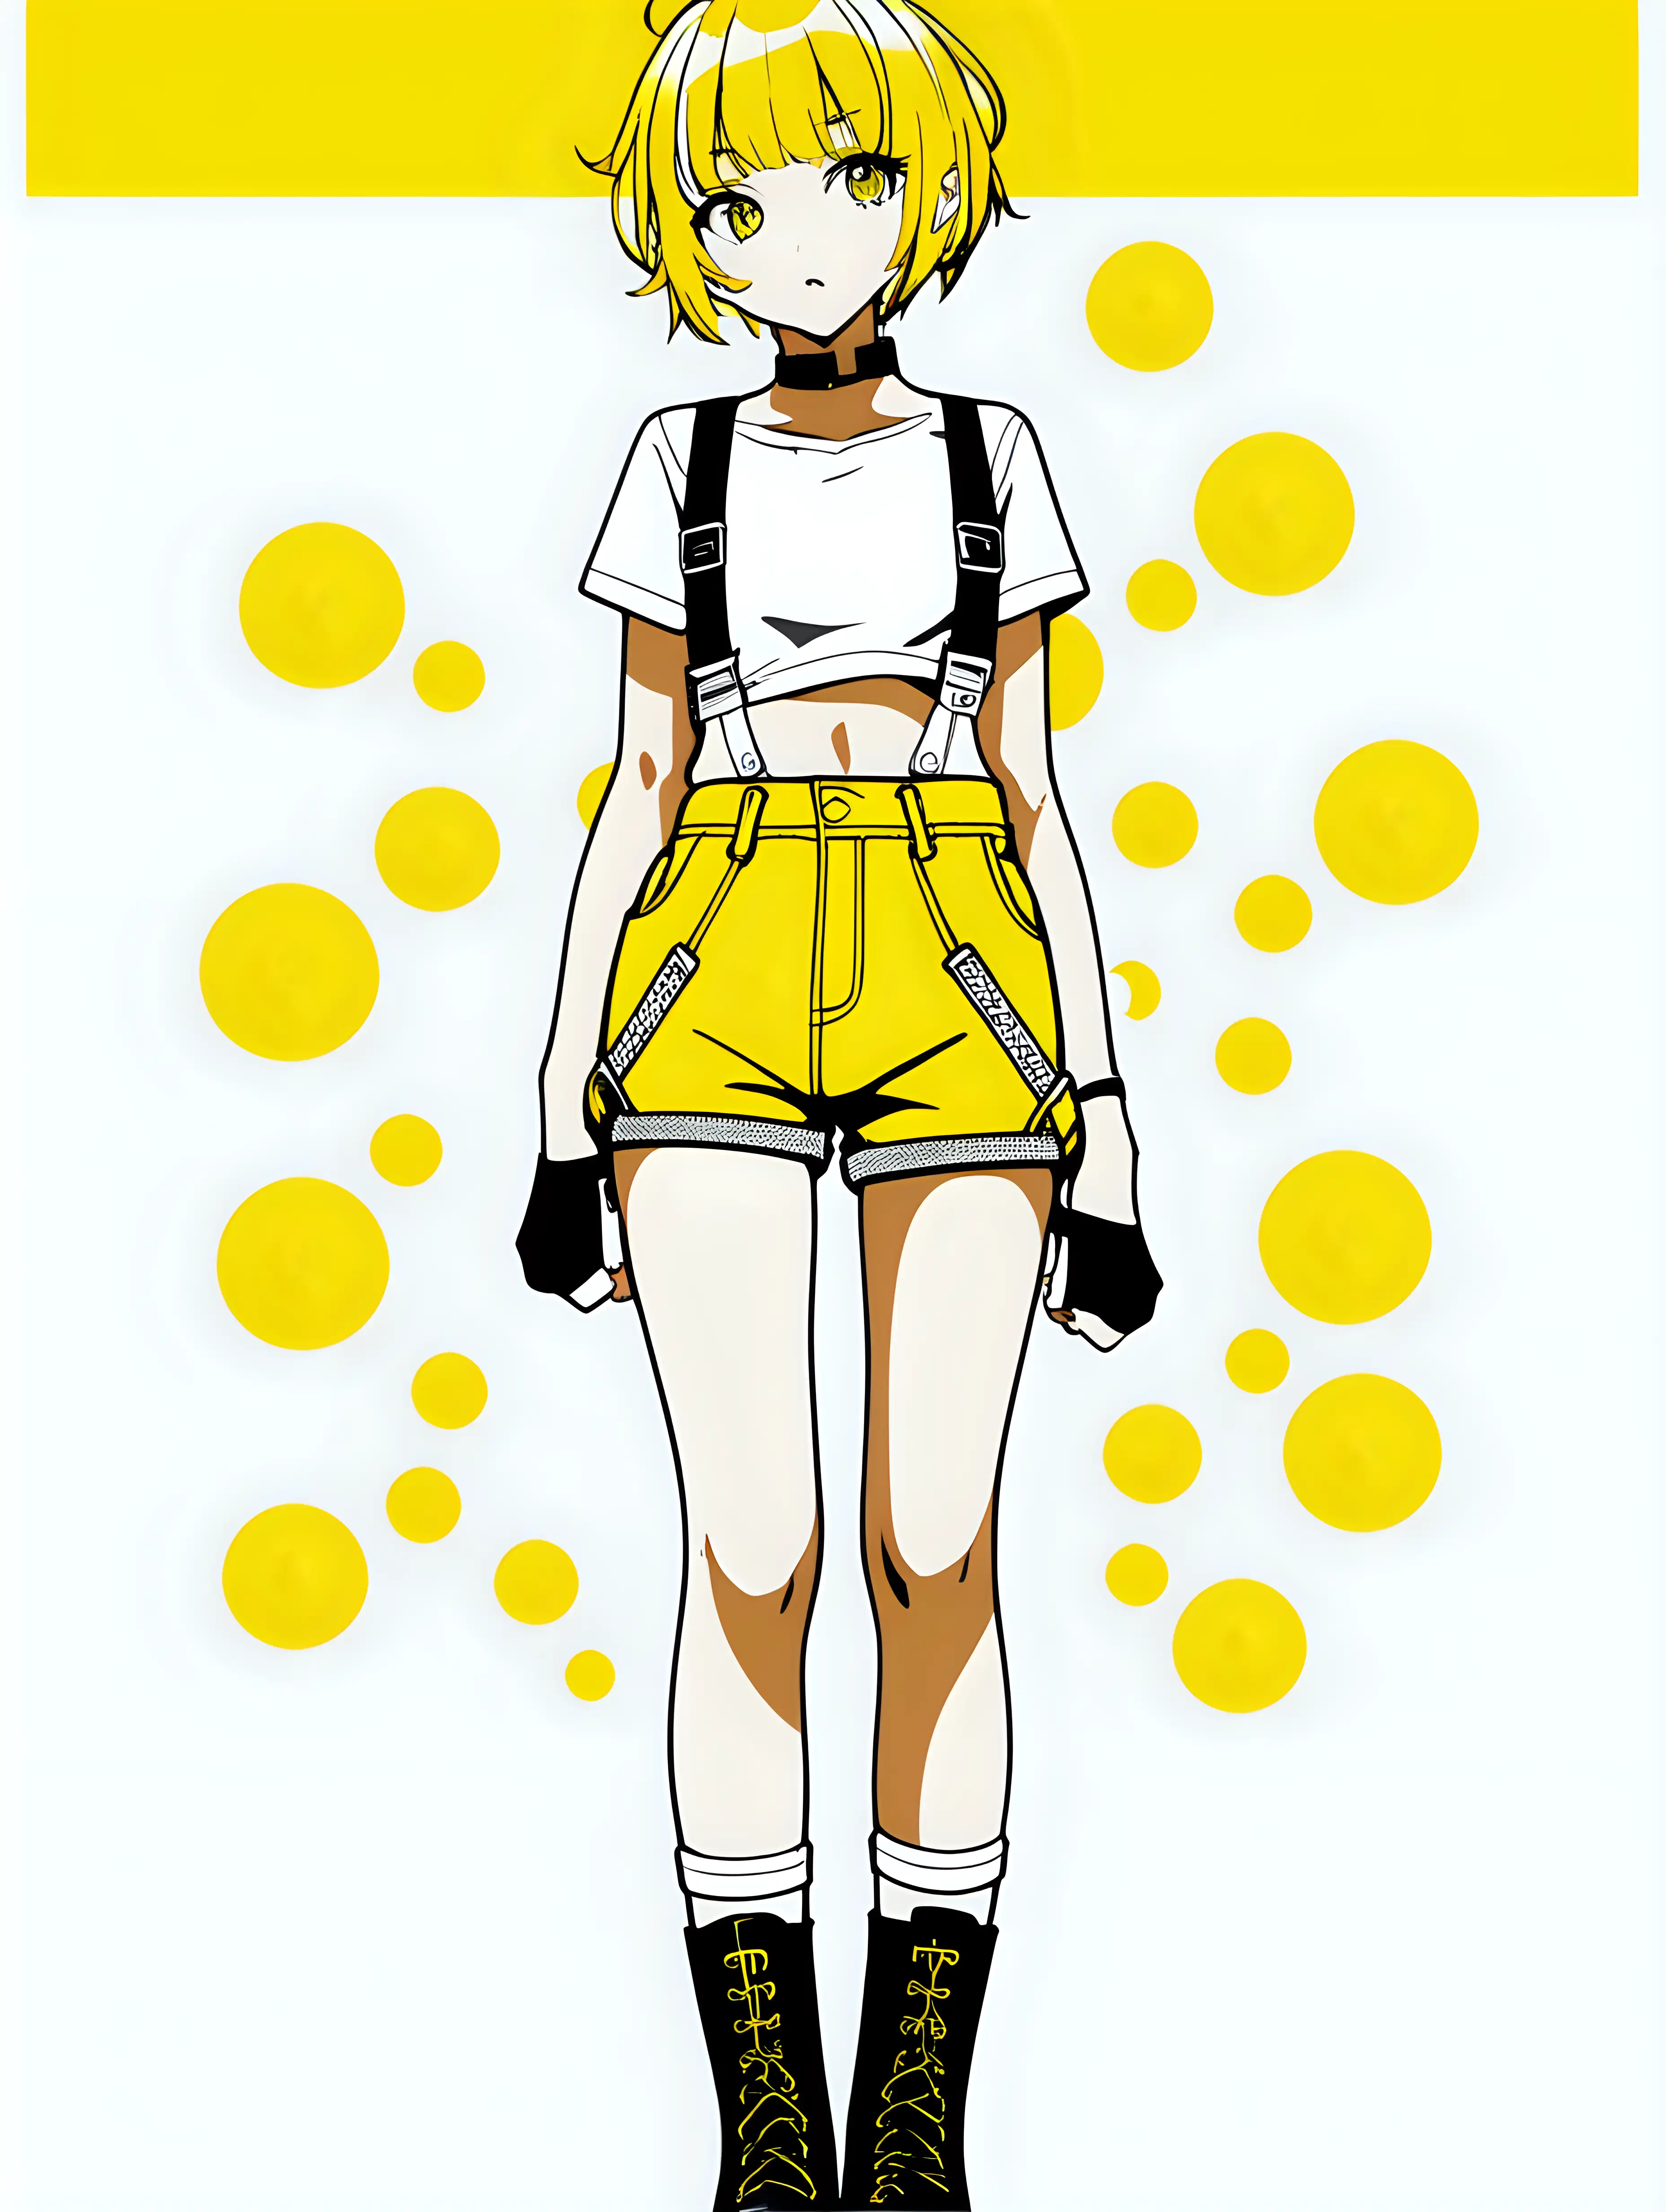 anime girl short tshirt toned 6 pack midriff wearing suspenders short yellow hair full body black boots white background posterized halftone yellow black white 3 color minimal design